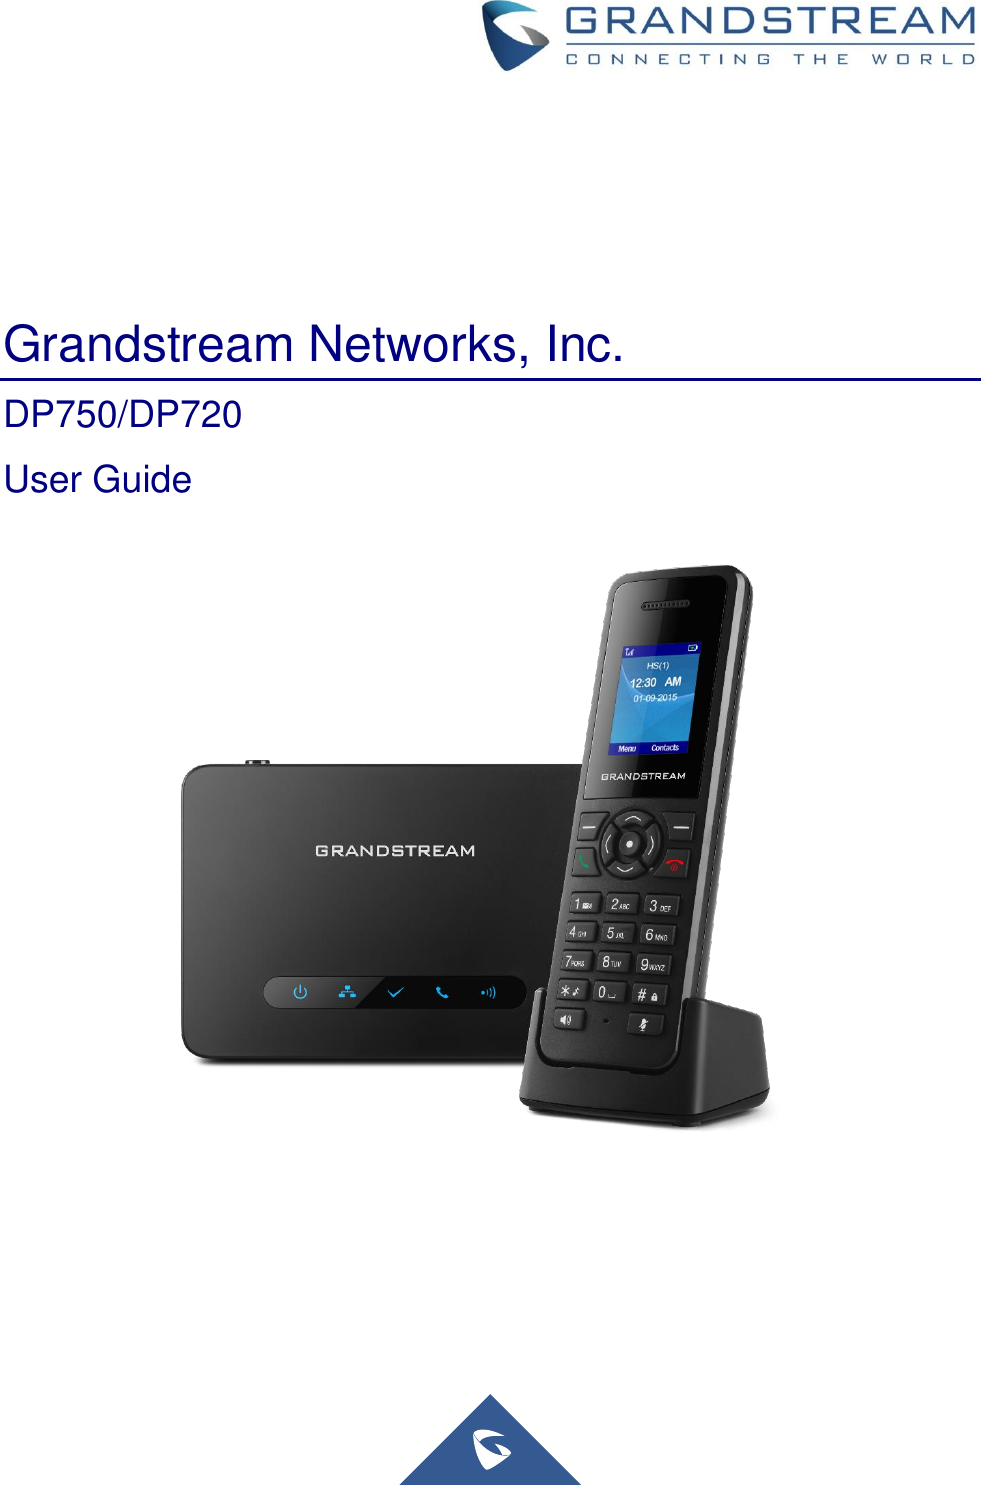                  Grandstream Networks, Inc. DP750/DP720 User Guide 